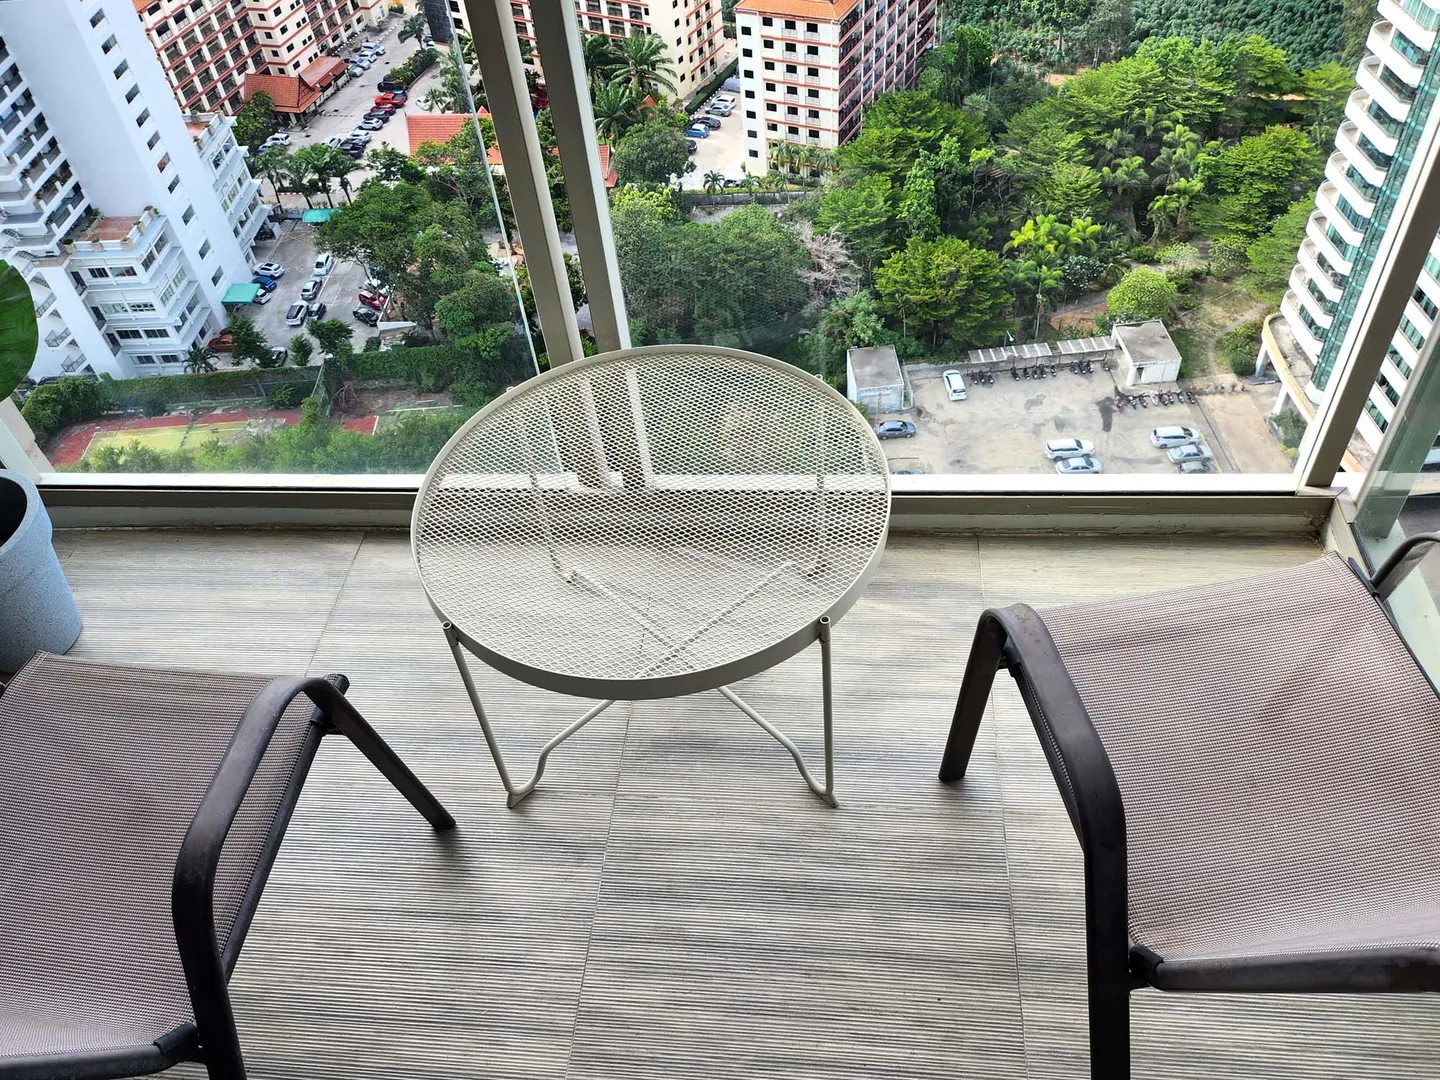 Кресла и столик на балконе.